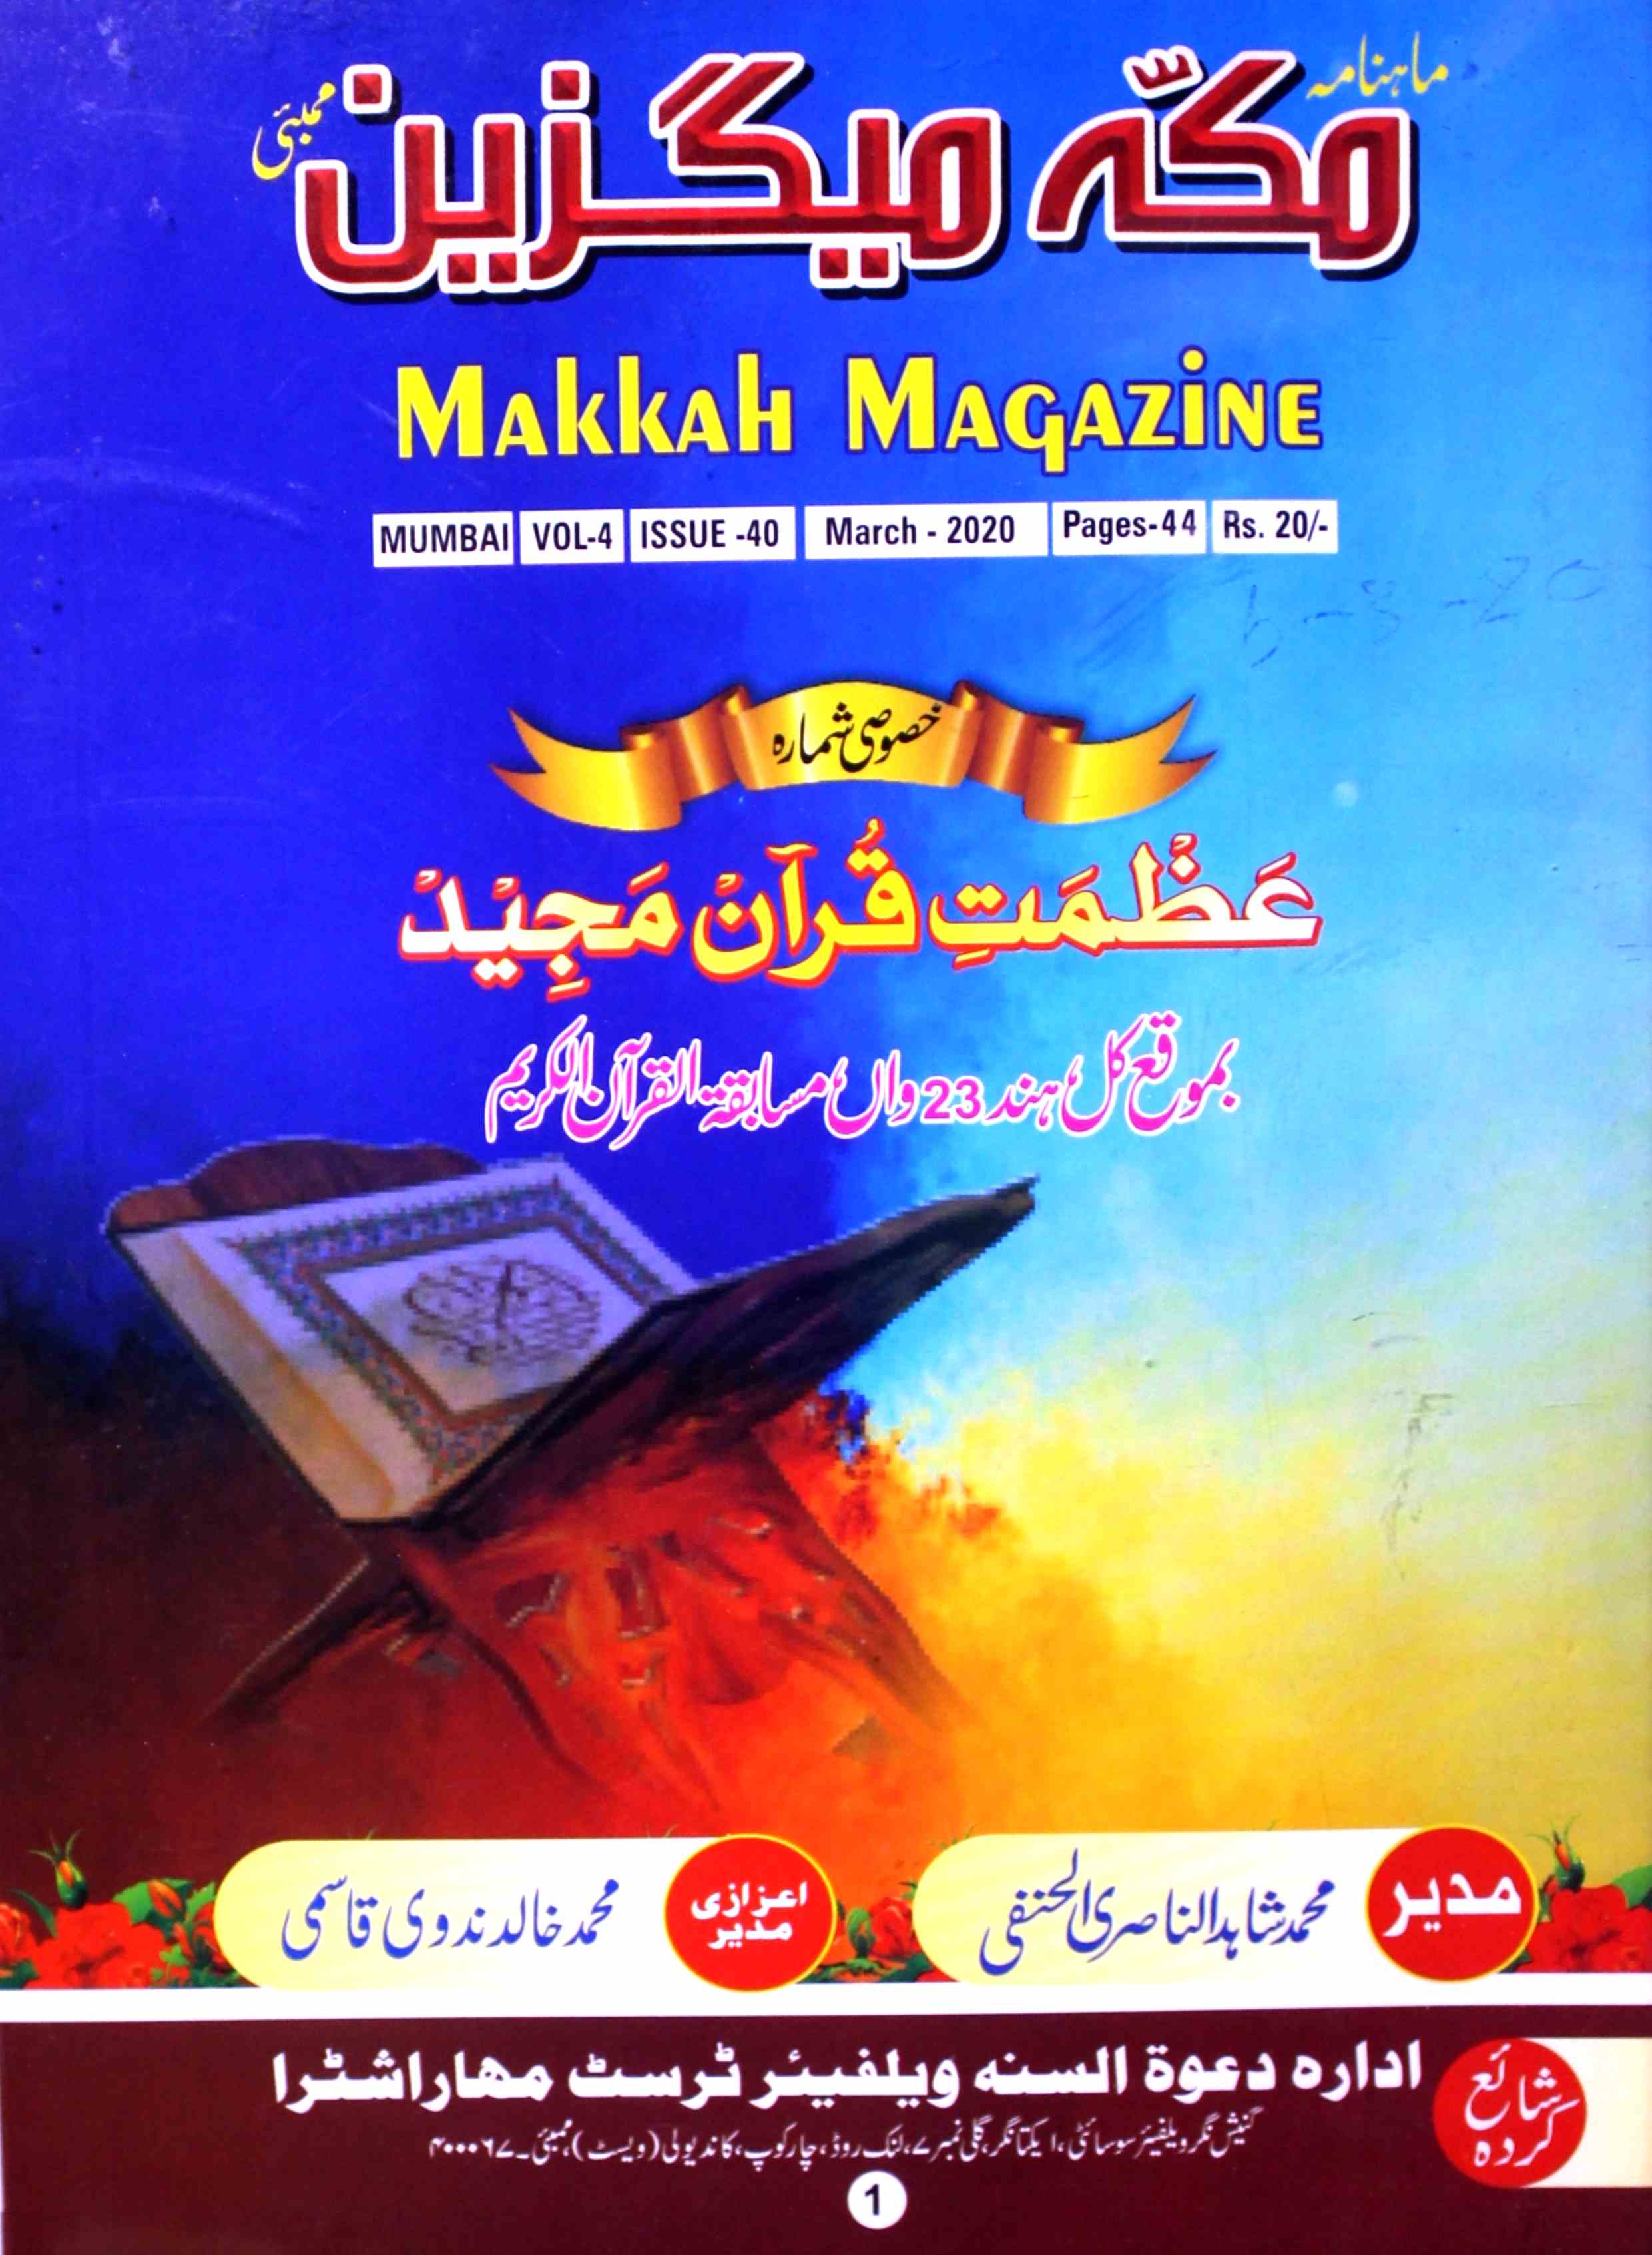 makkah magzine jild-4 shumara-40-Shumara Number-040